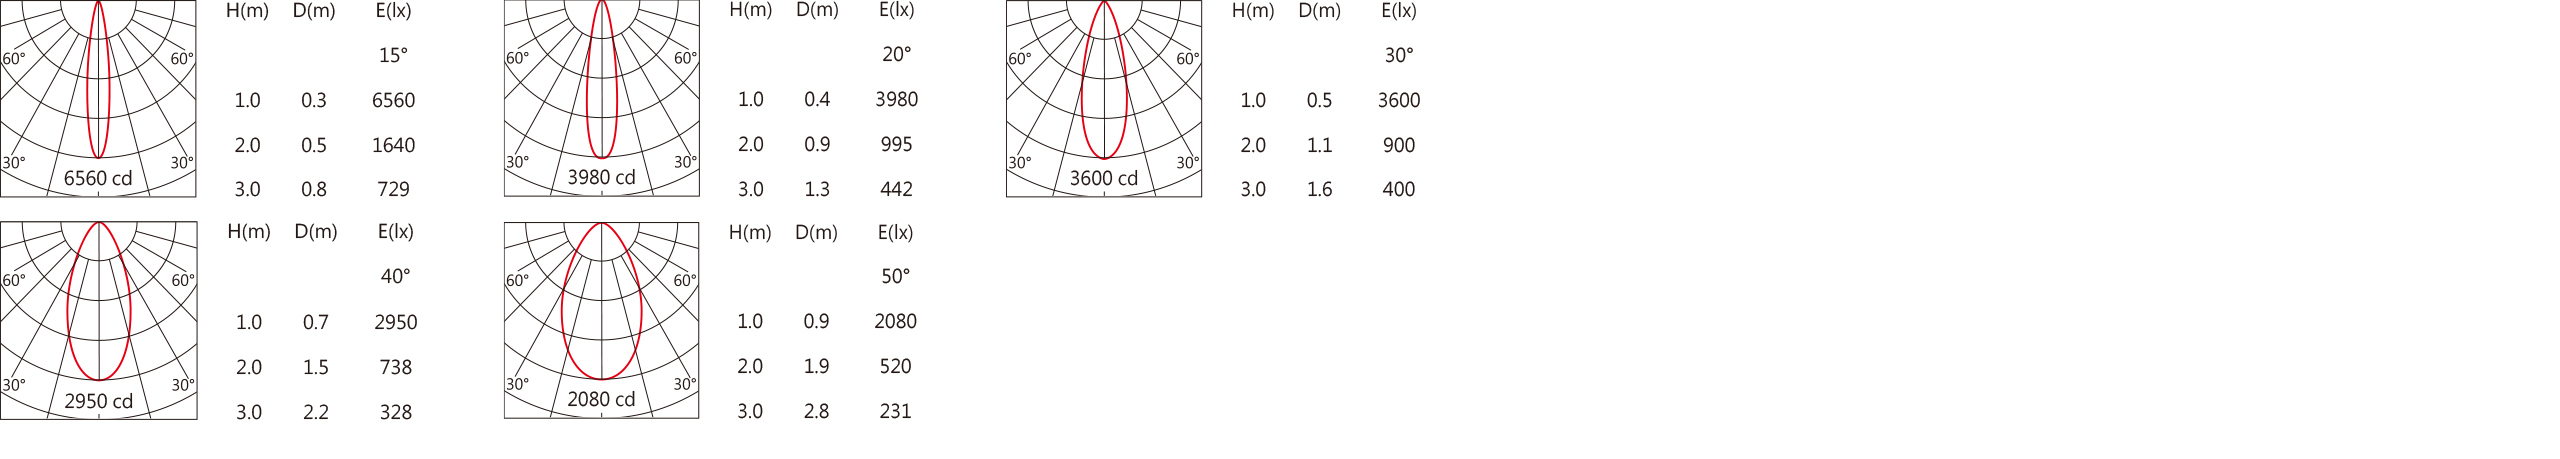 OFA-117C Light distribution.jpg